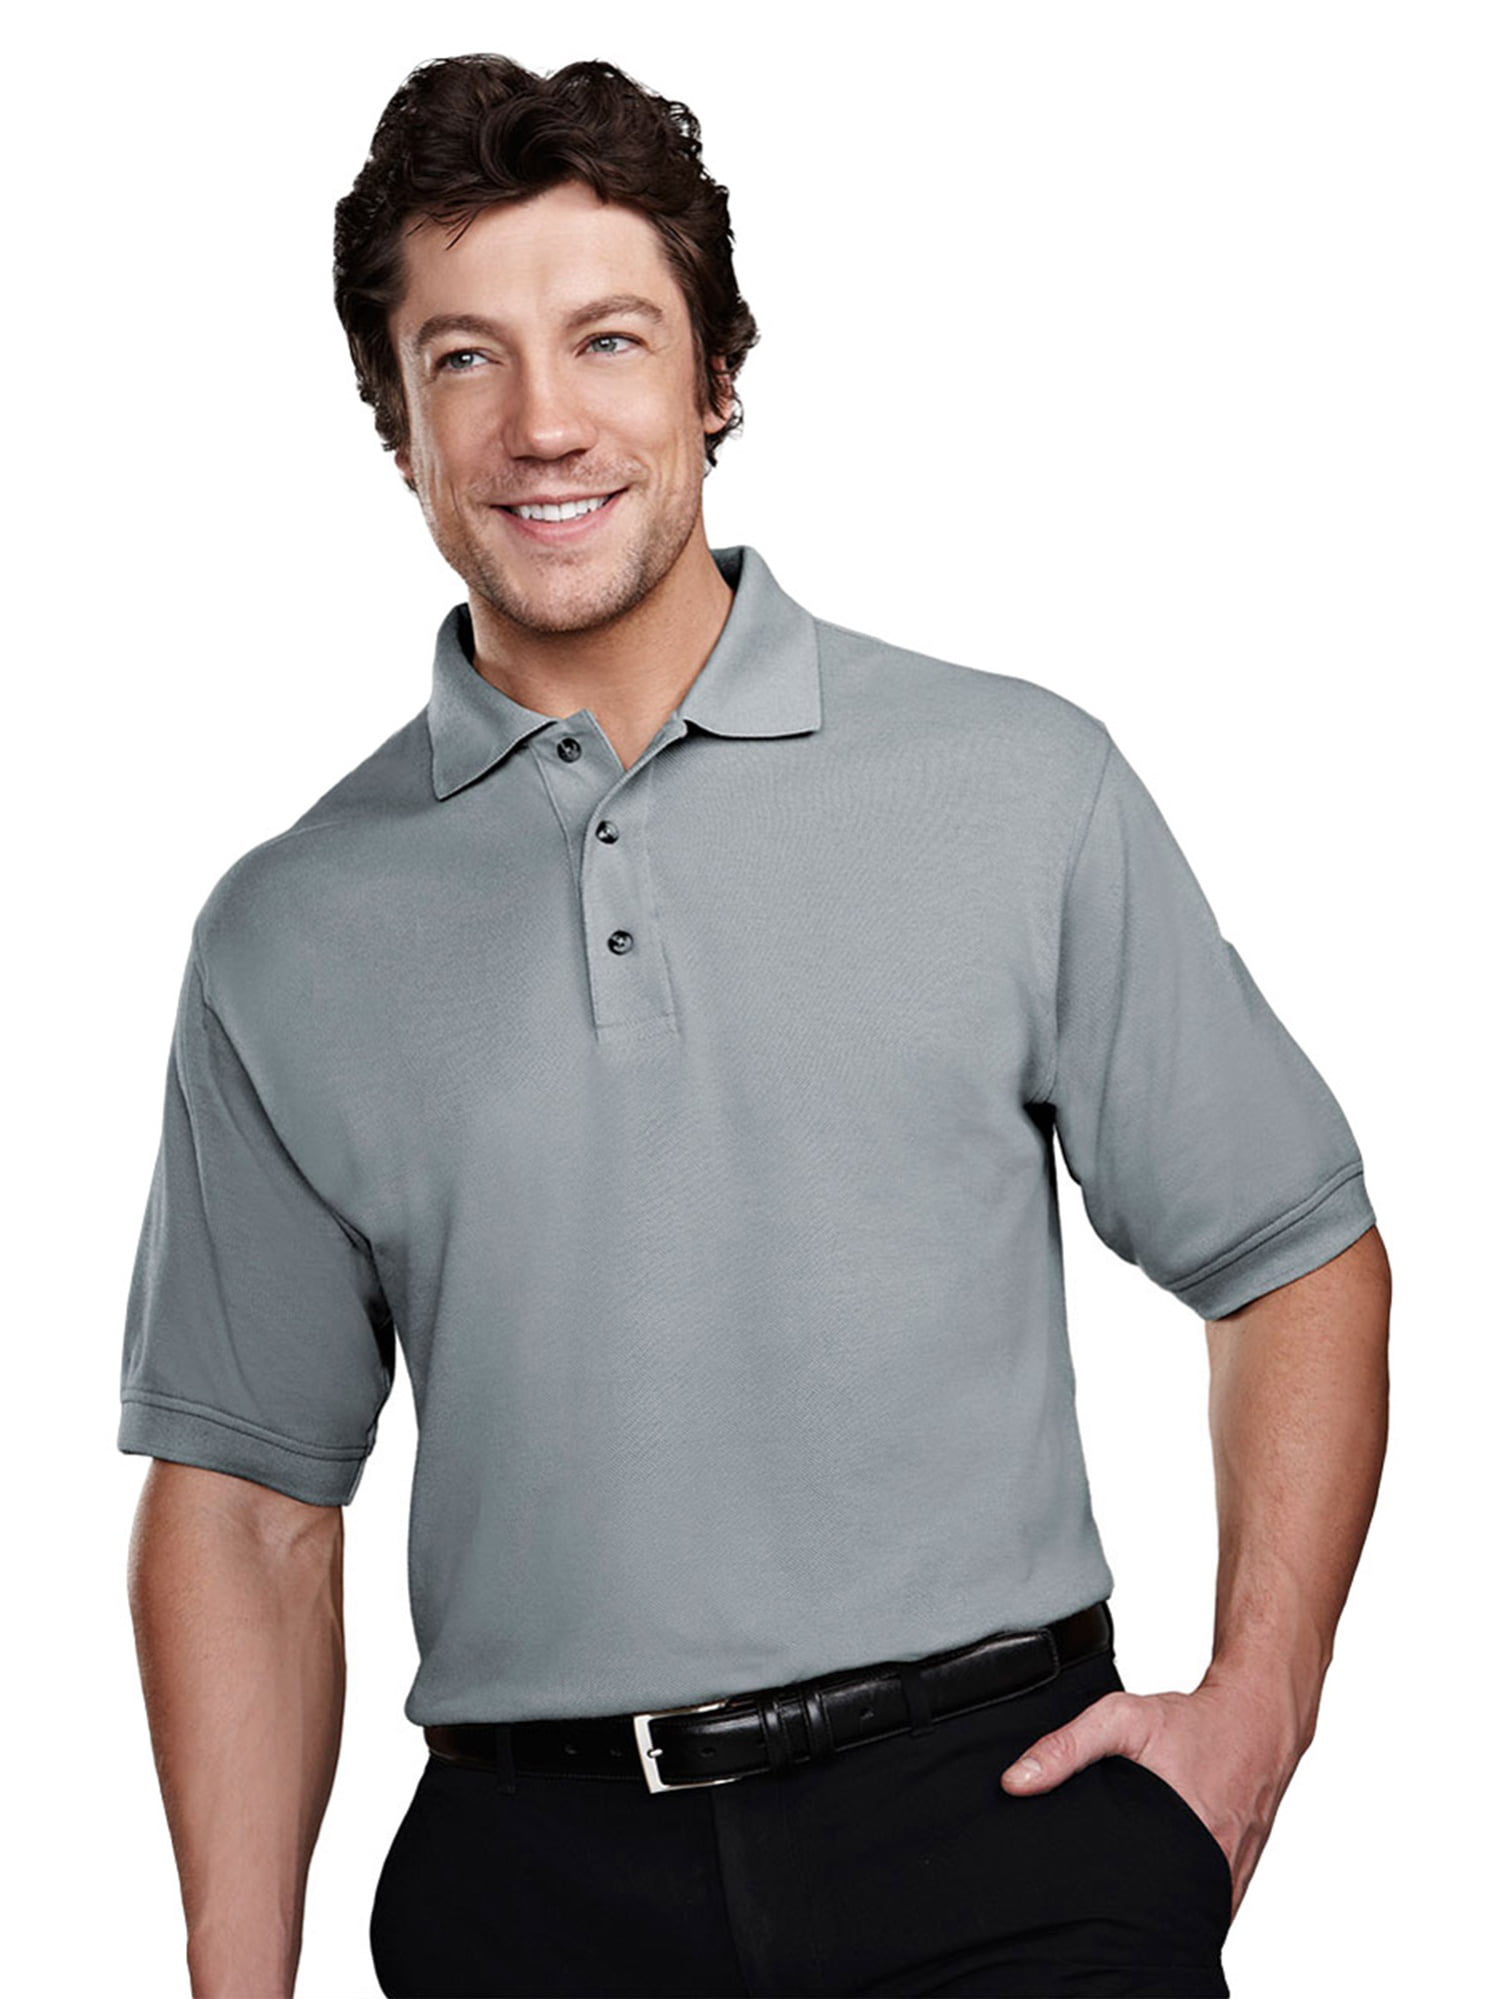 Tri-Mountain Men's Big And Tall Stain Resistant Golf Shirt - Walmart.com